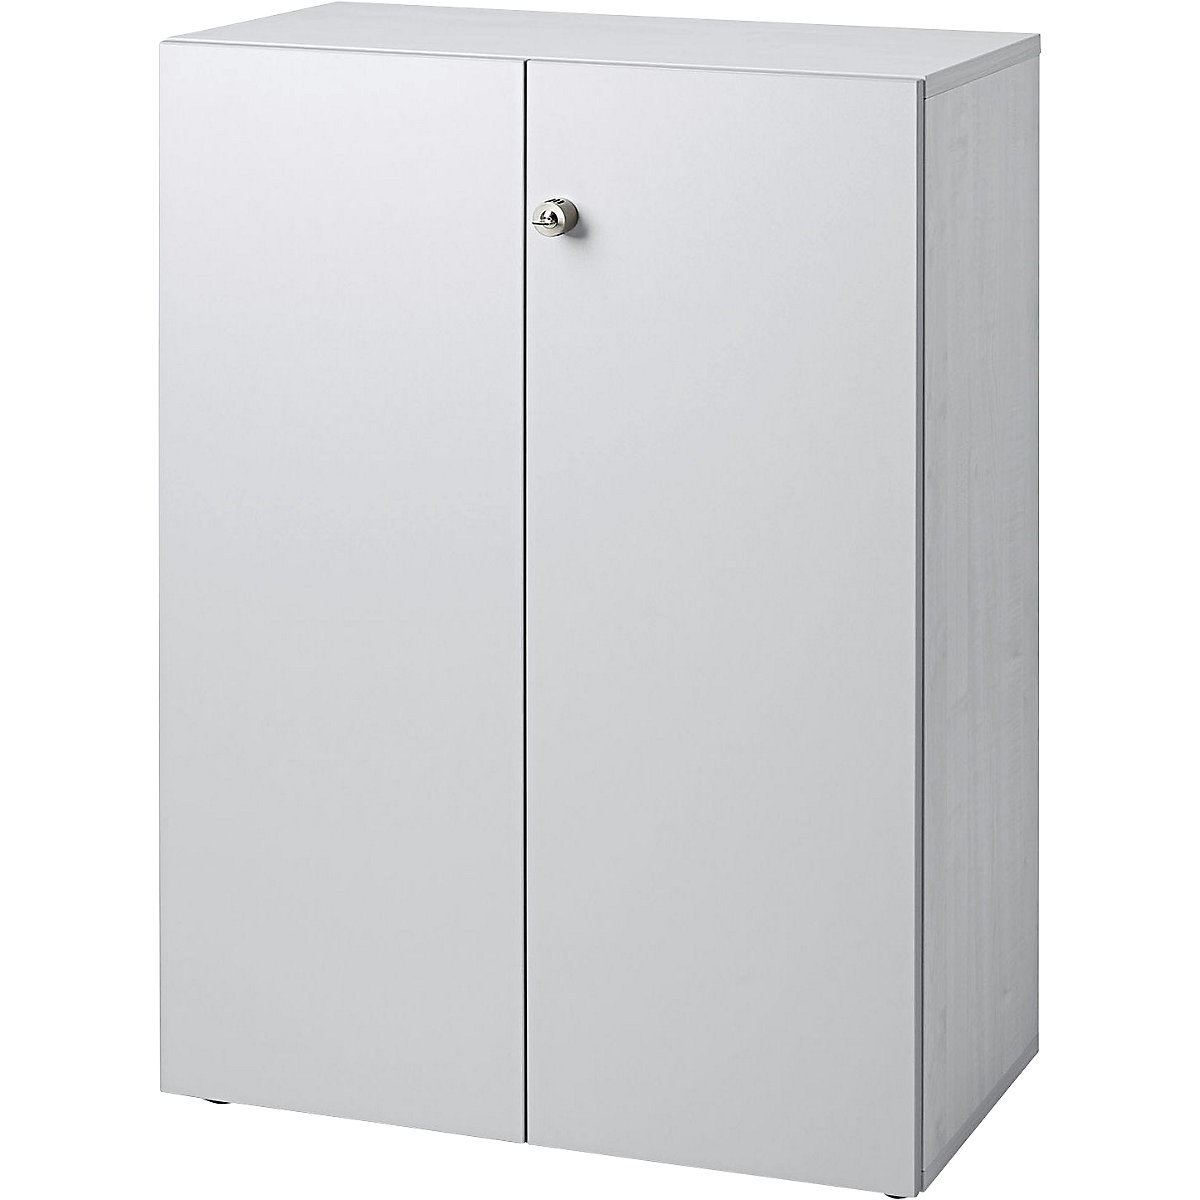 Filing cupboard ANNY – eurokraft pro, hinged doors, 2 shelves, light grey / light grey-1